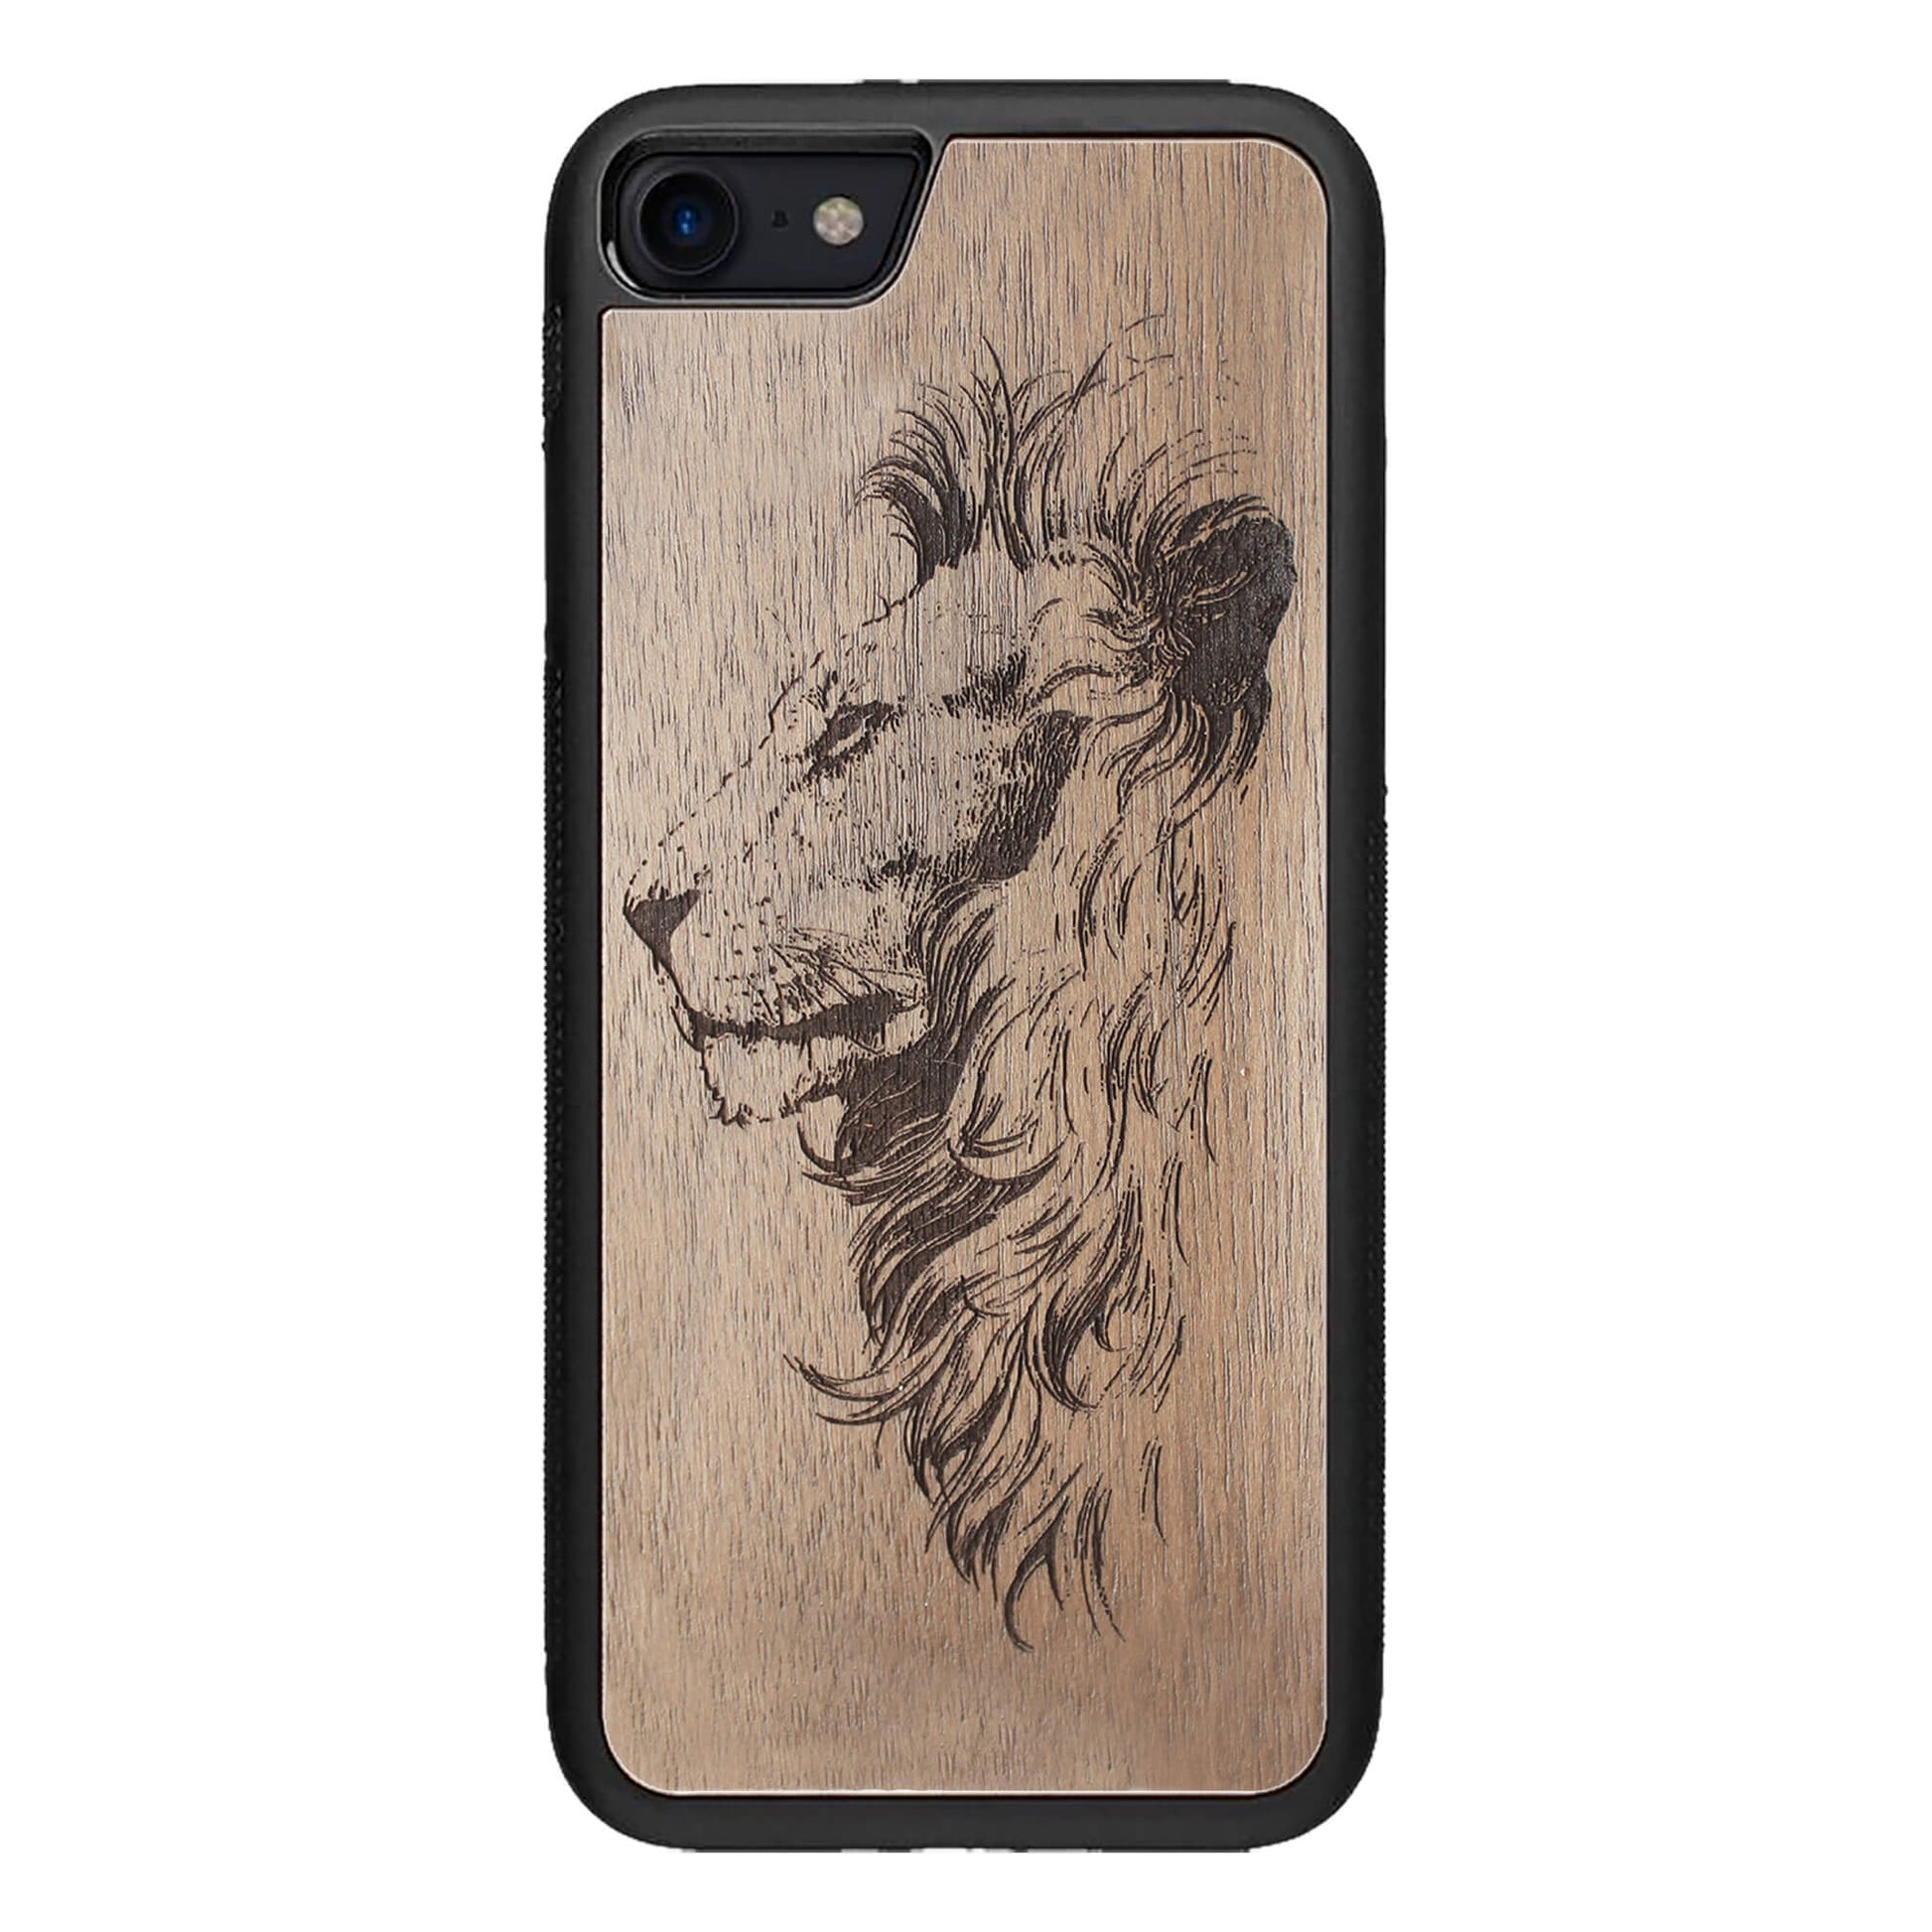 Wooden Case for iPhone SE 3 generation case Lion